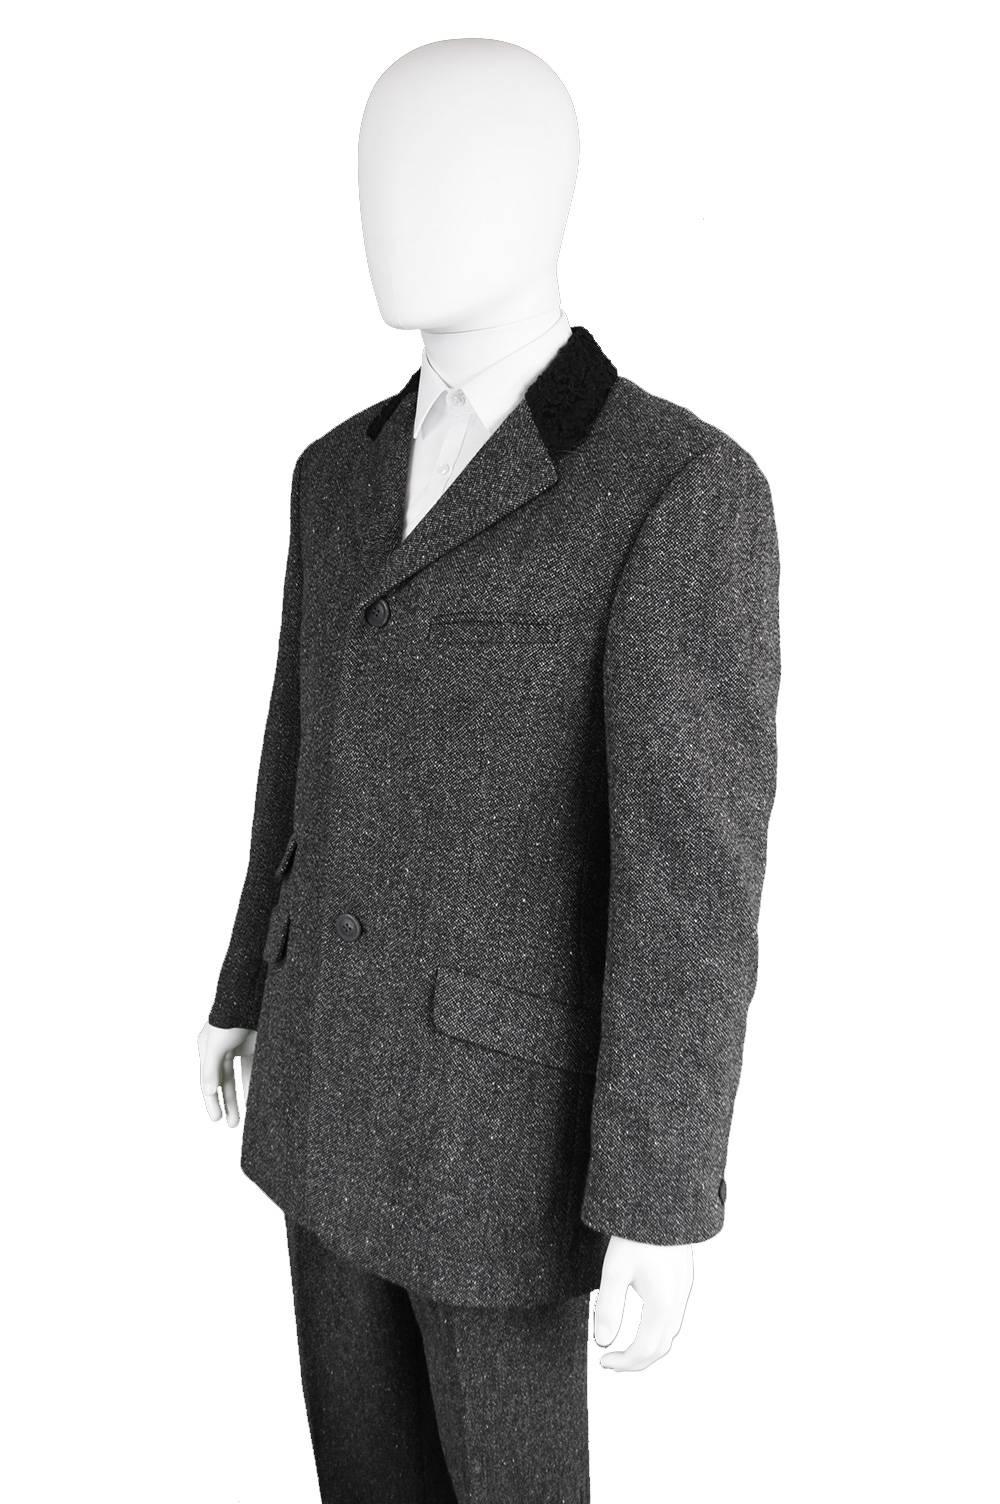 Black Gianni Versace Men's Vintage Grey Tweed Suit with wool boucle collar, 1990s